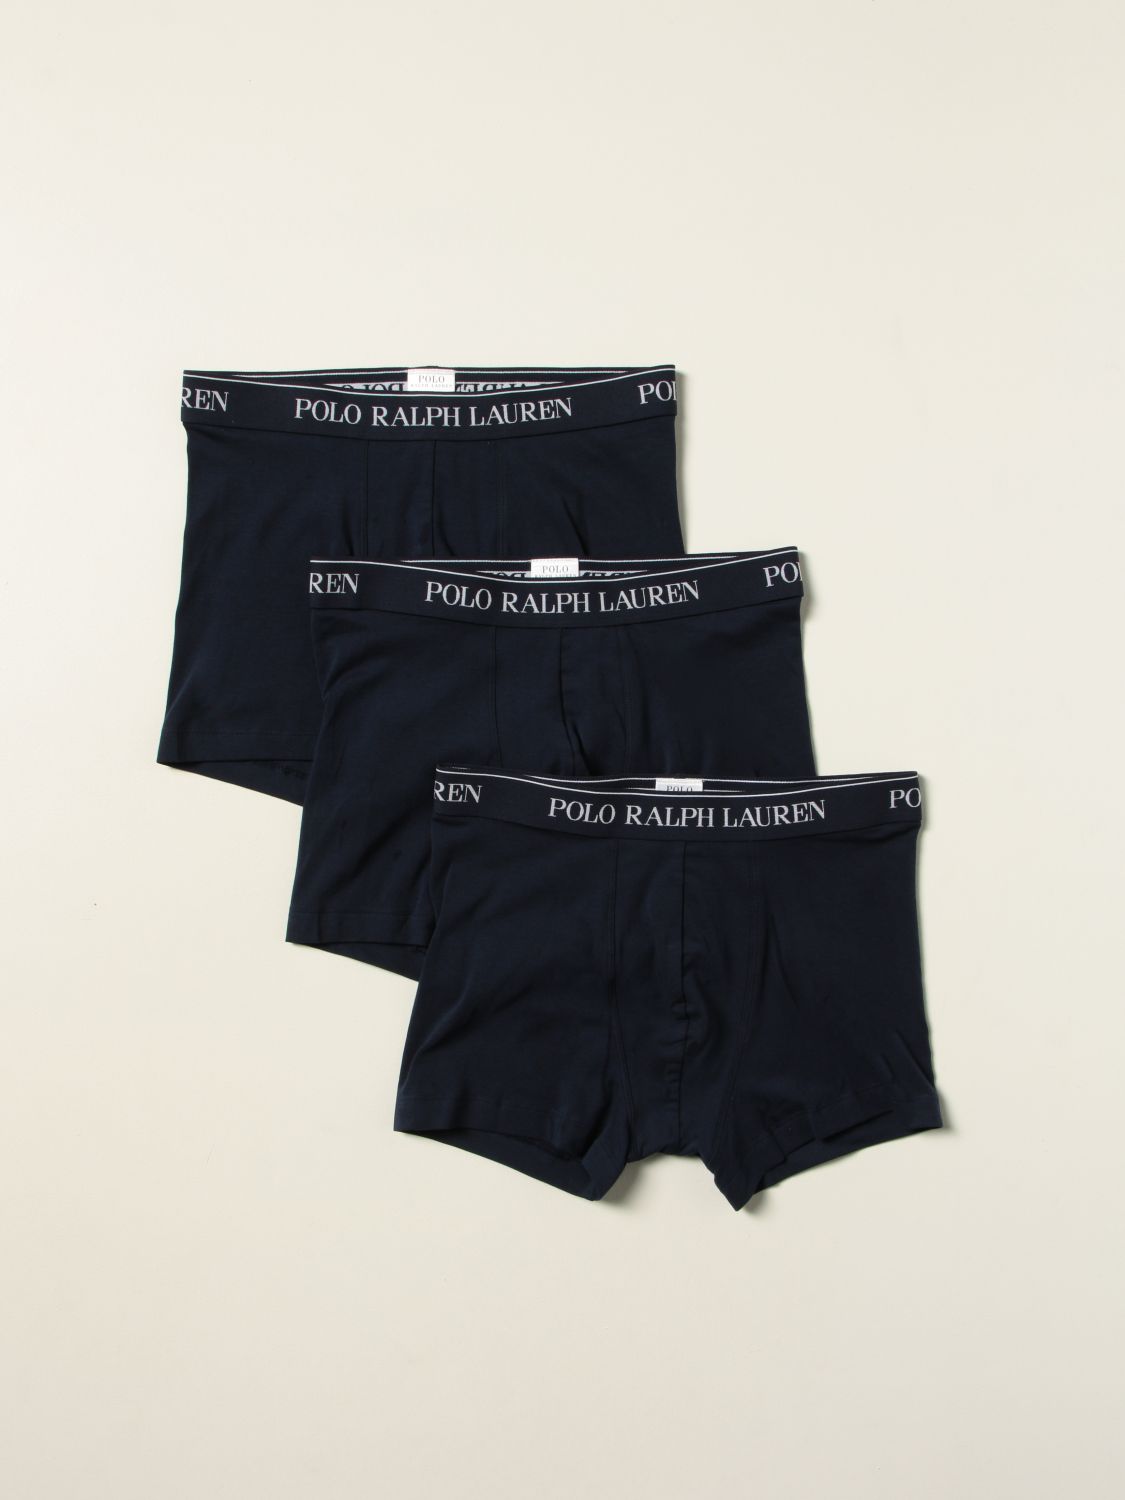 内衣 Polo Ralph Lauren: Polo Ralph Lauren Logo 四角内裤3件装 彩色 1